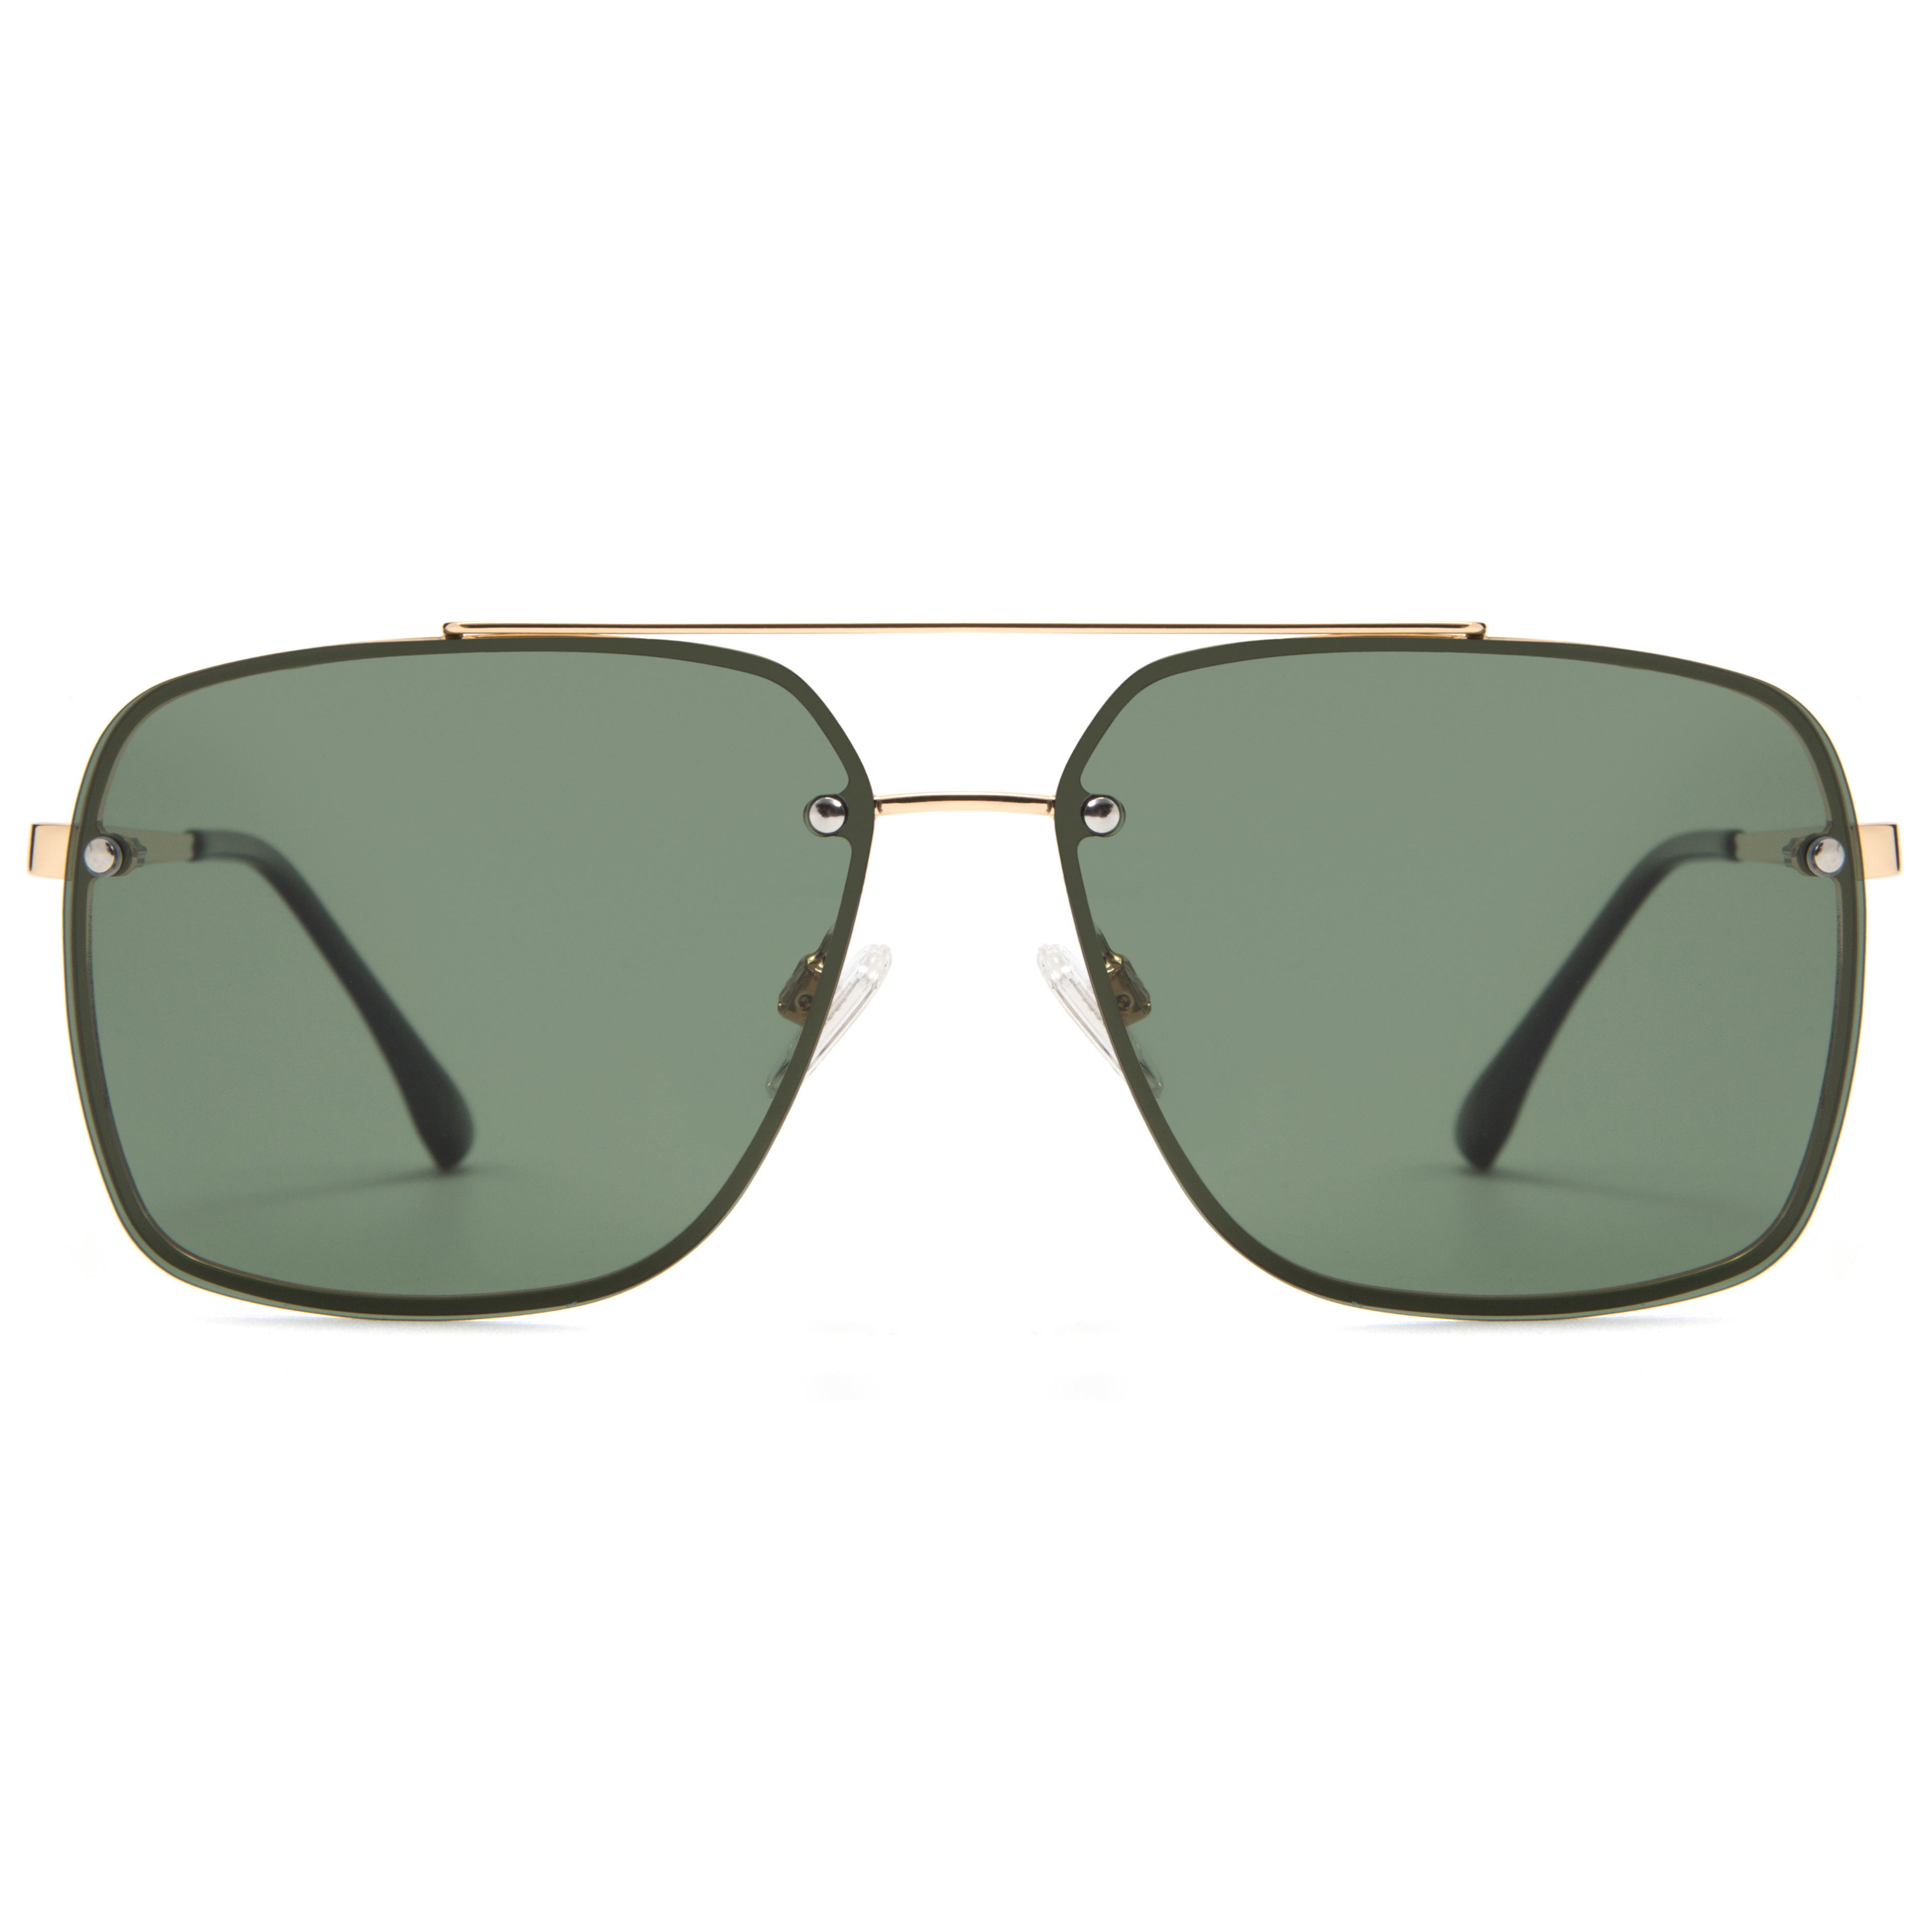 EUGENIA Men 2020 Polarized Custom Logo Printed Lenses Square Sunglasses